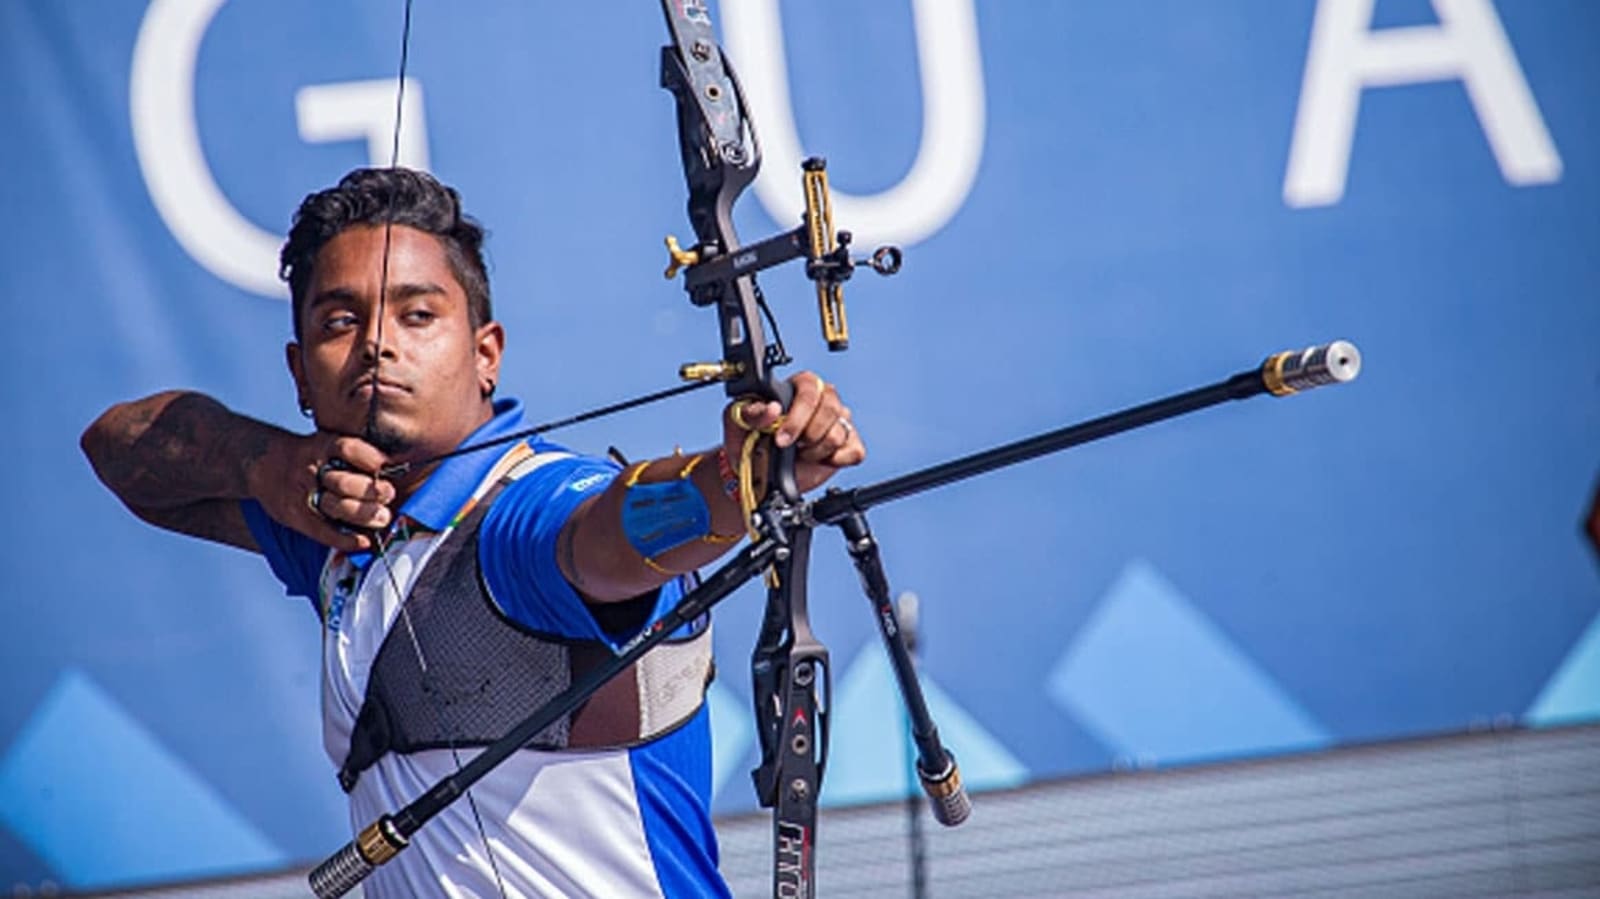 Tokyo Olympics Highlights Day 1 Archery Ranking Round Results Pravin 31st Atanu 35th Tarundeep 37th Hindustan Times